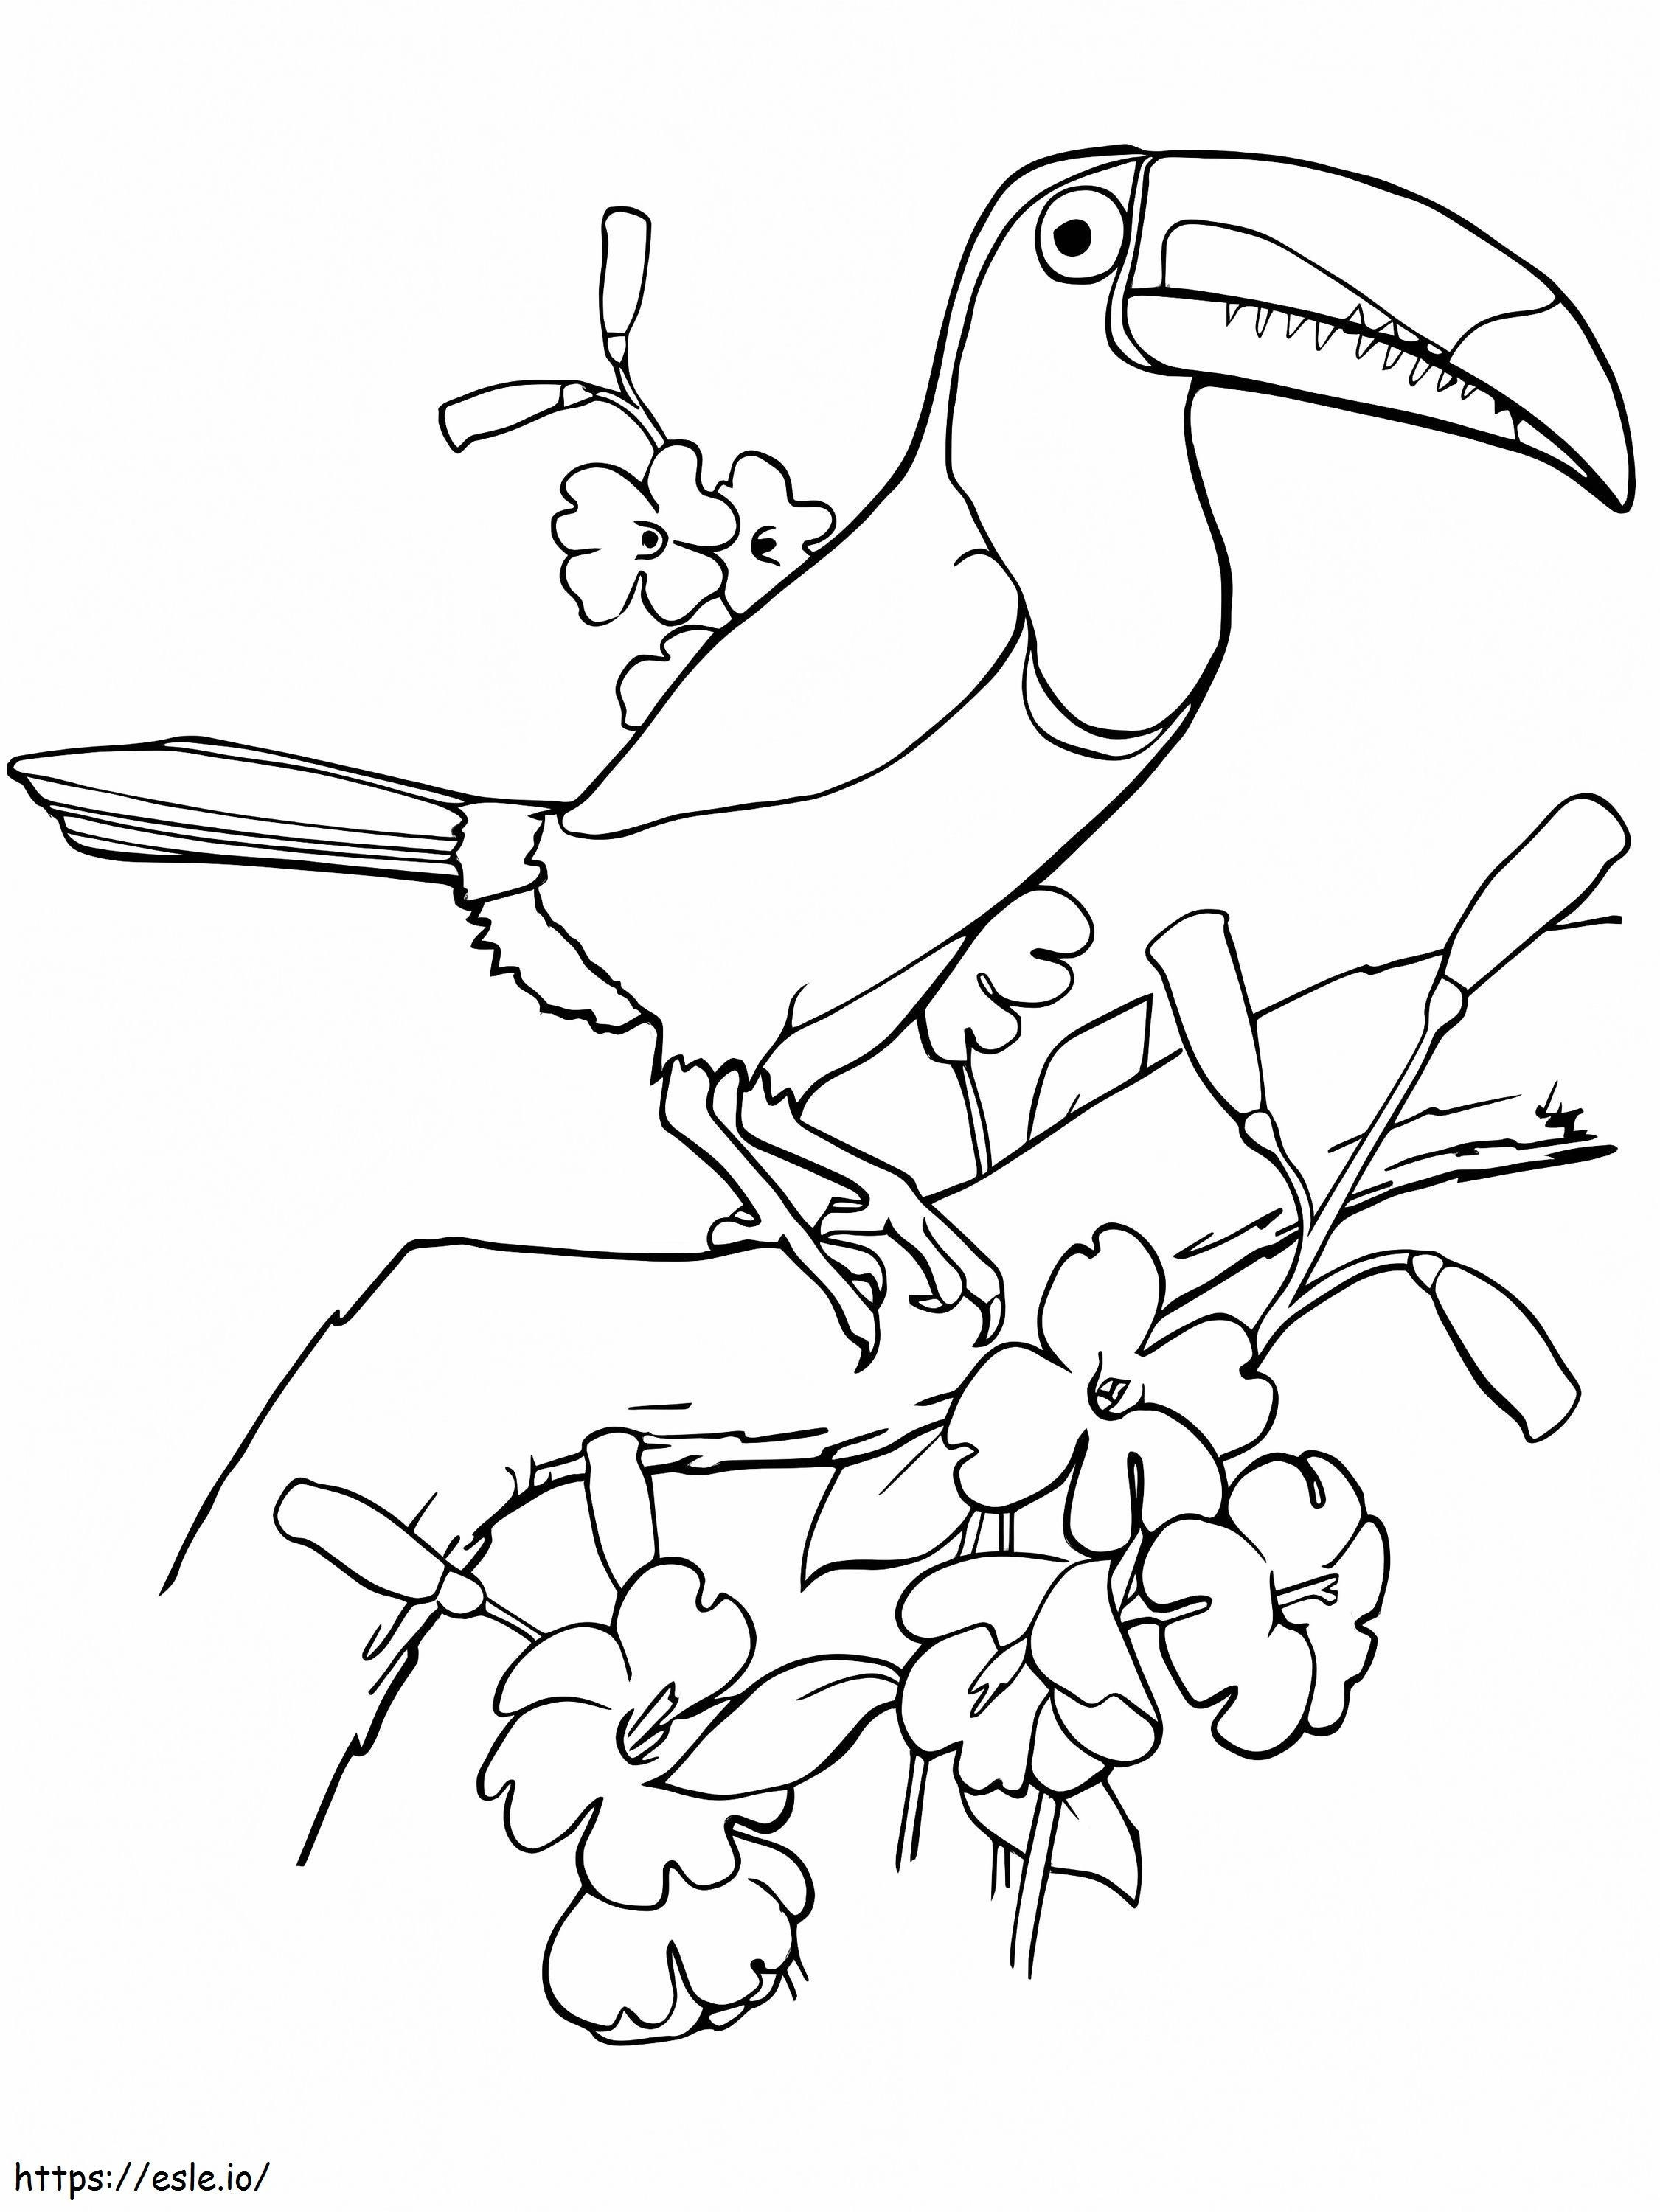 Tukan-Vogel-Kletterbaum ausmalbilder